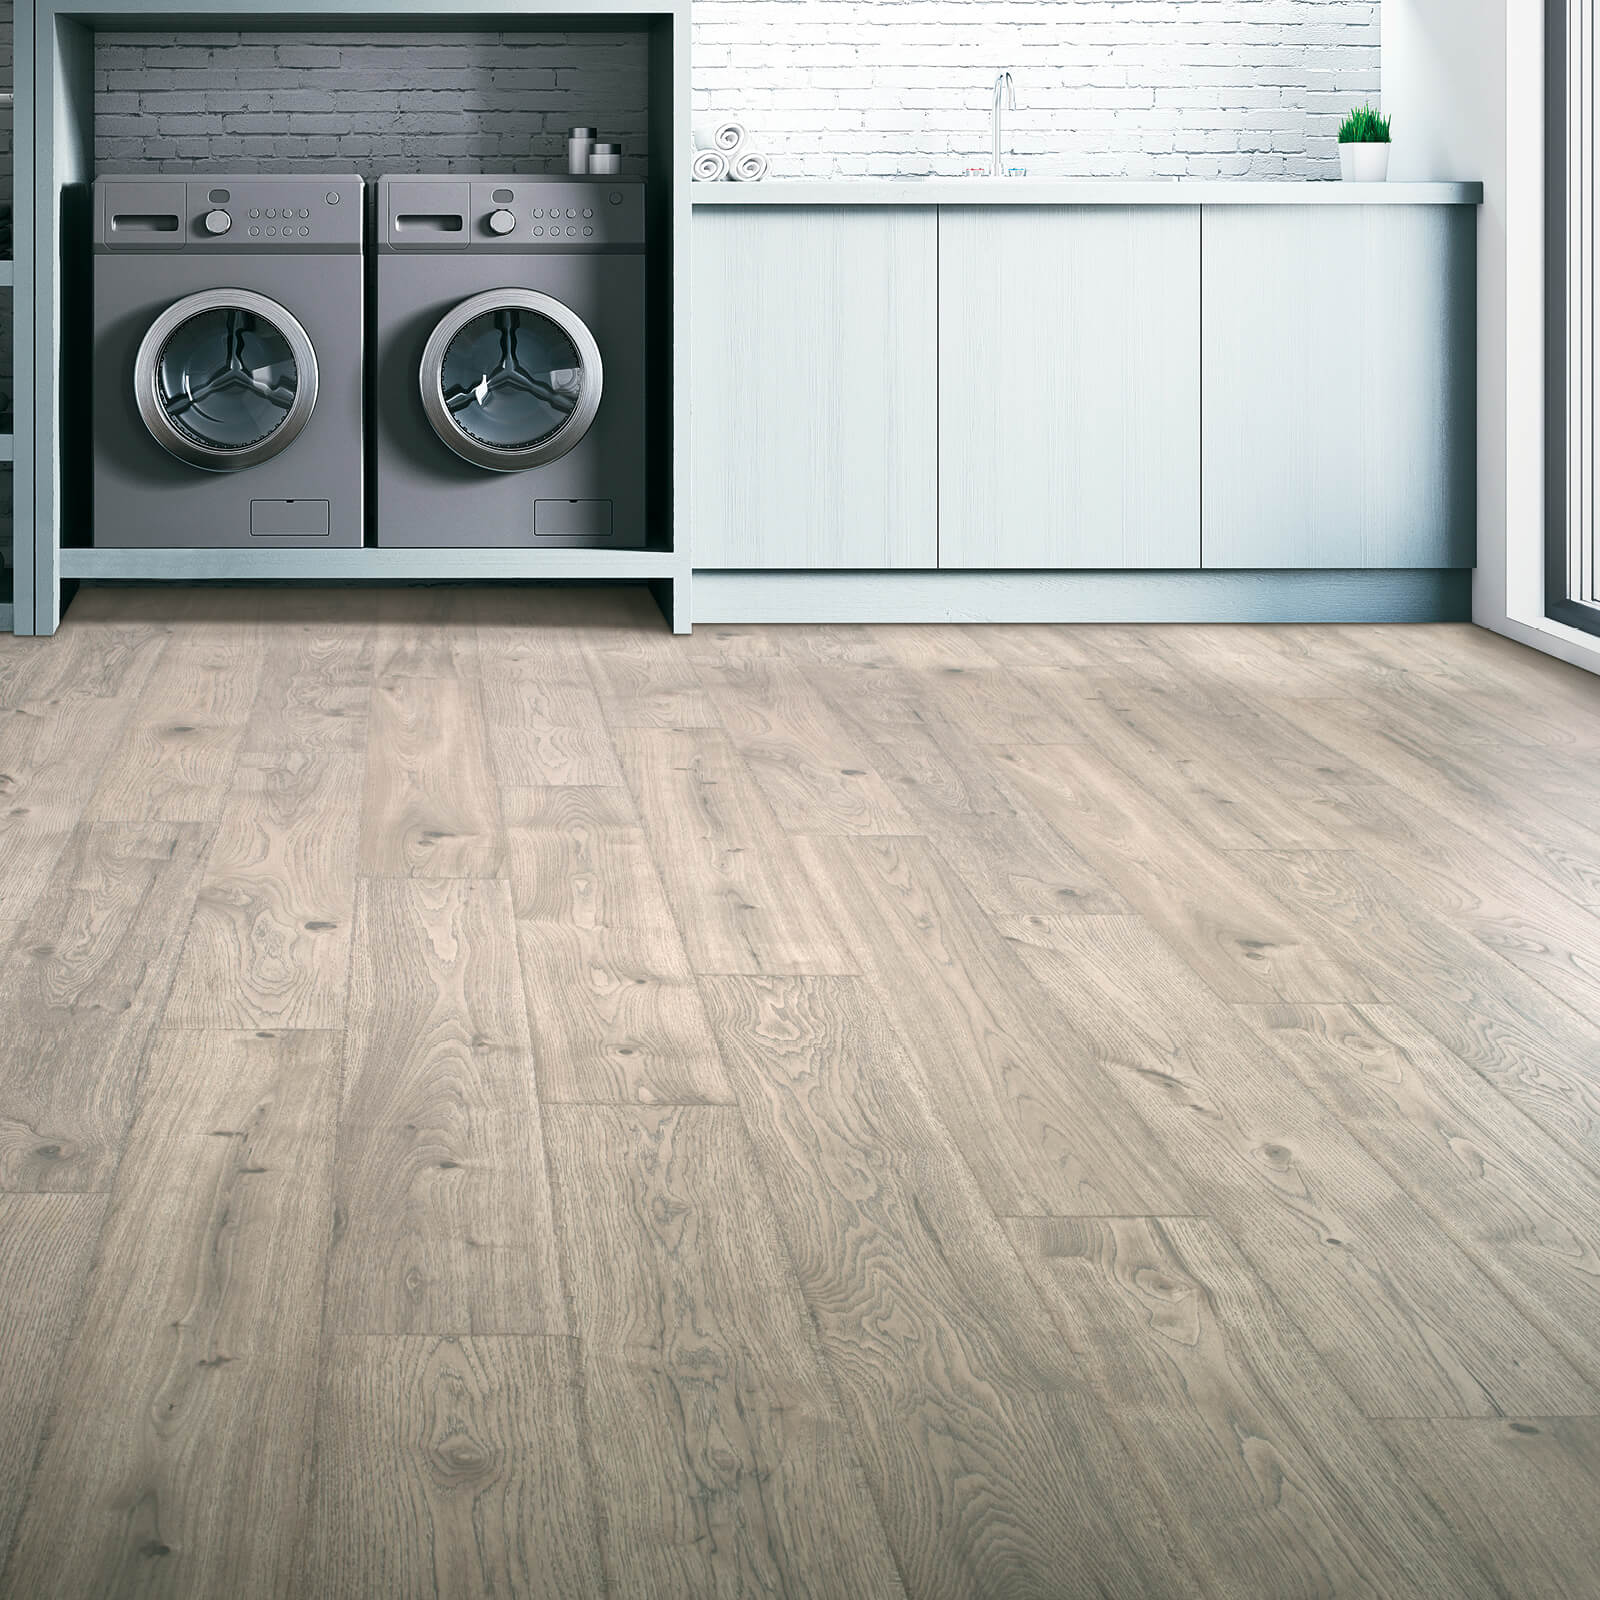 Laundry room Laminate flooring | CarpetsPlus Design Showroom of Hutchinson 